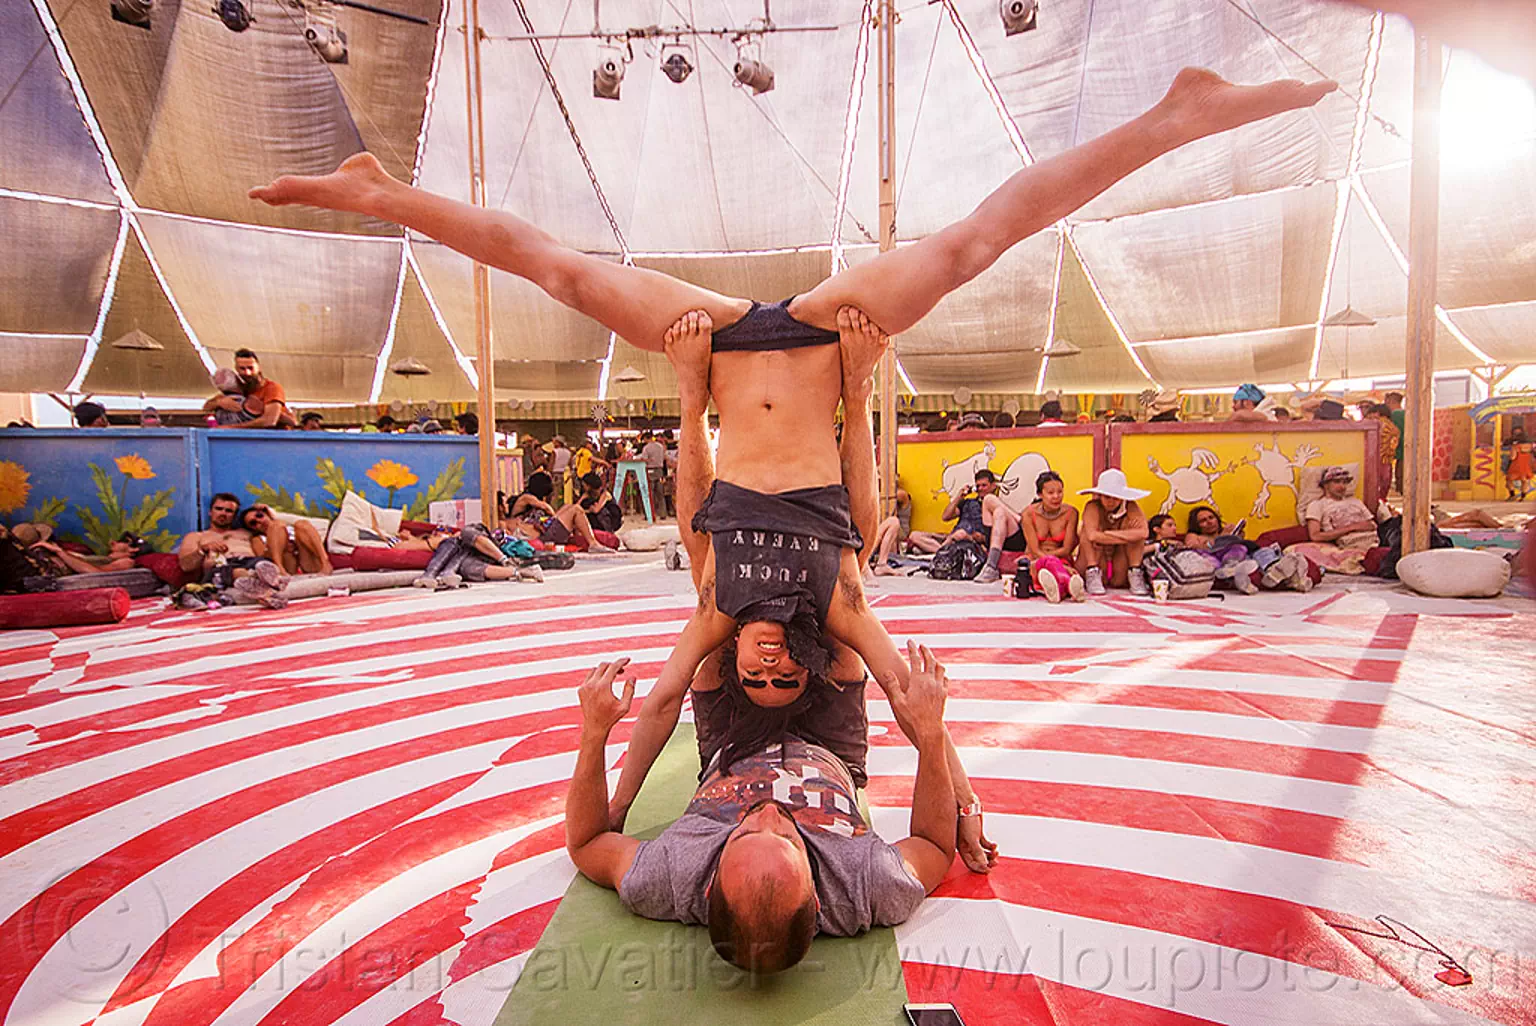 couple doing acro-yoga - burning man 2015, acro-yoga, azami, burning man, leg spread, legs spread, splits, spread eagle, upside down, woman